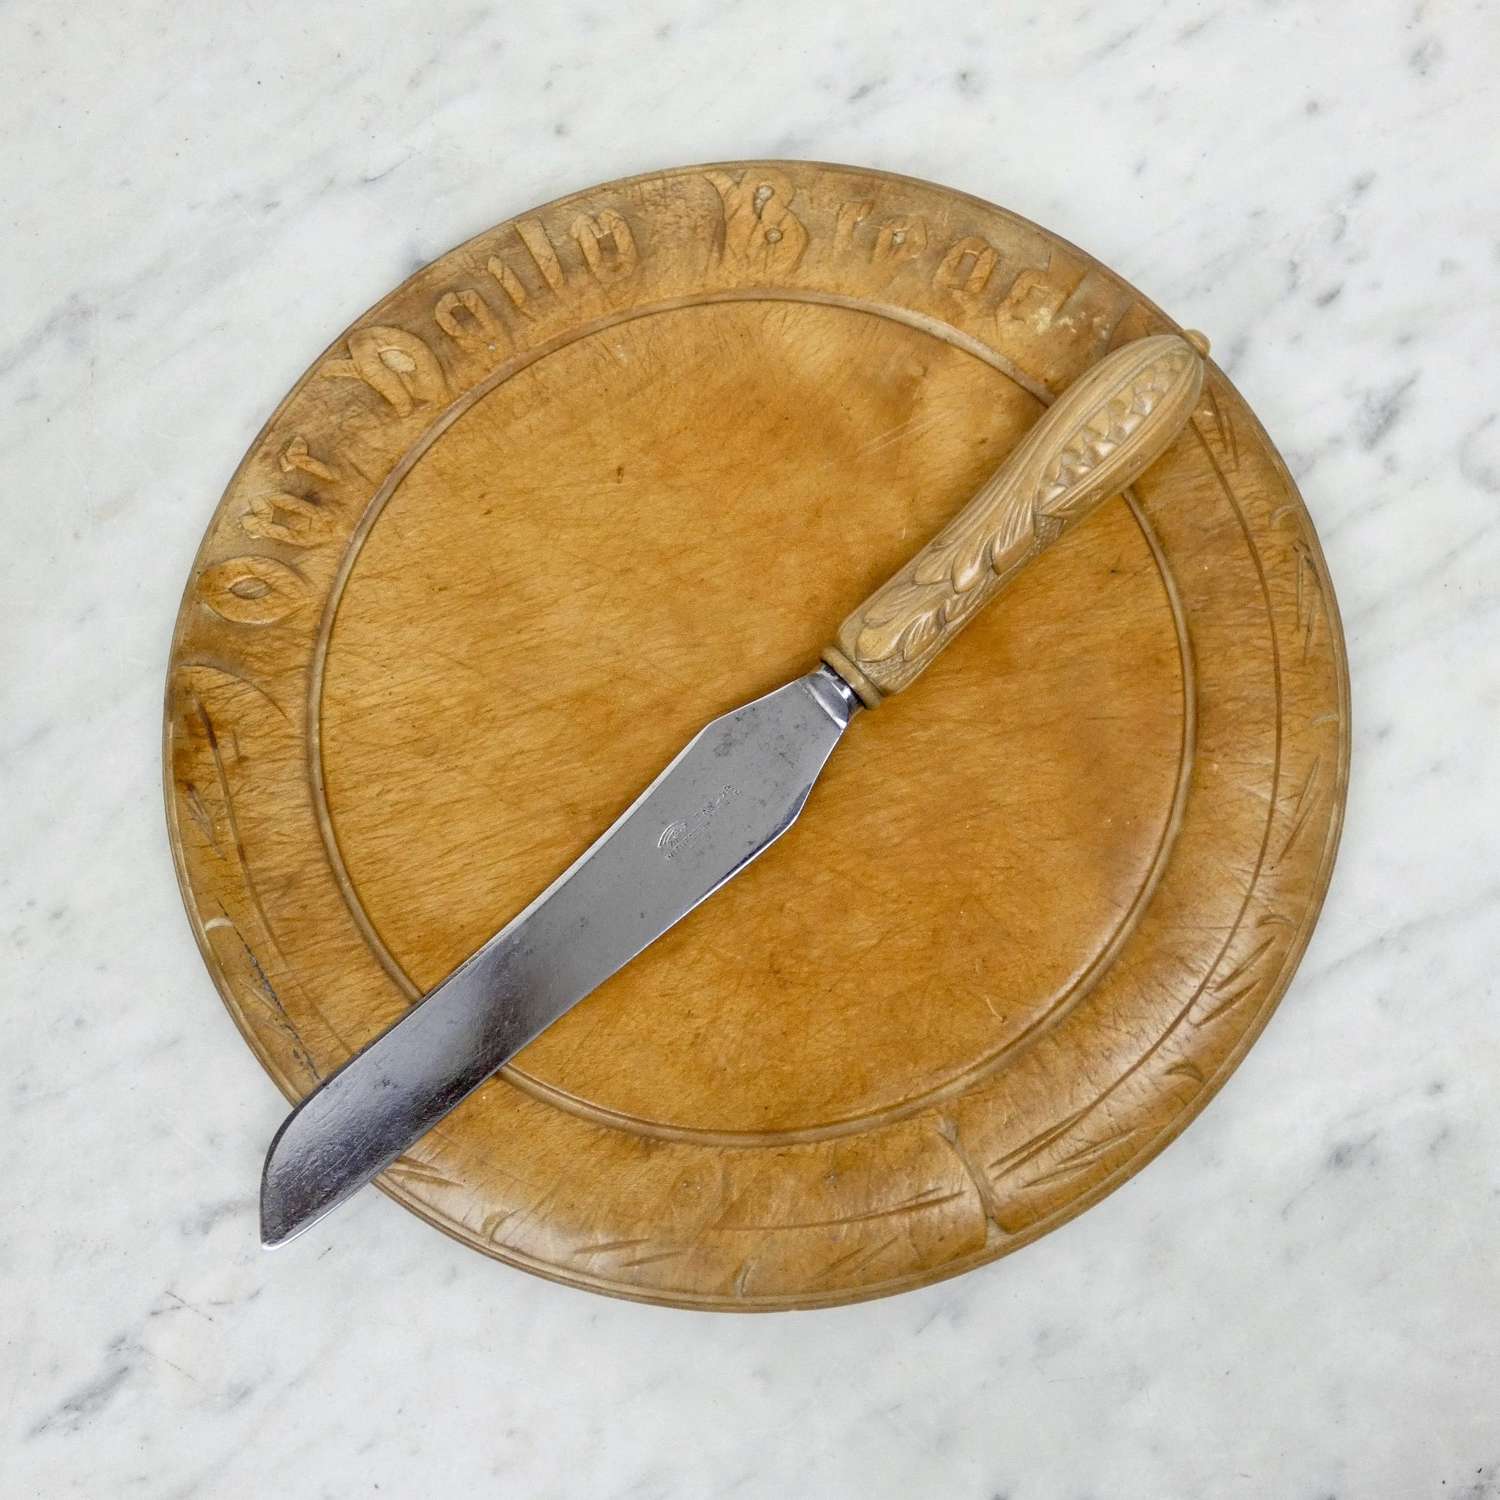 Taylor Witness carved bread knife